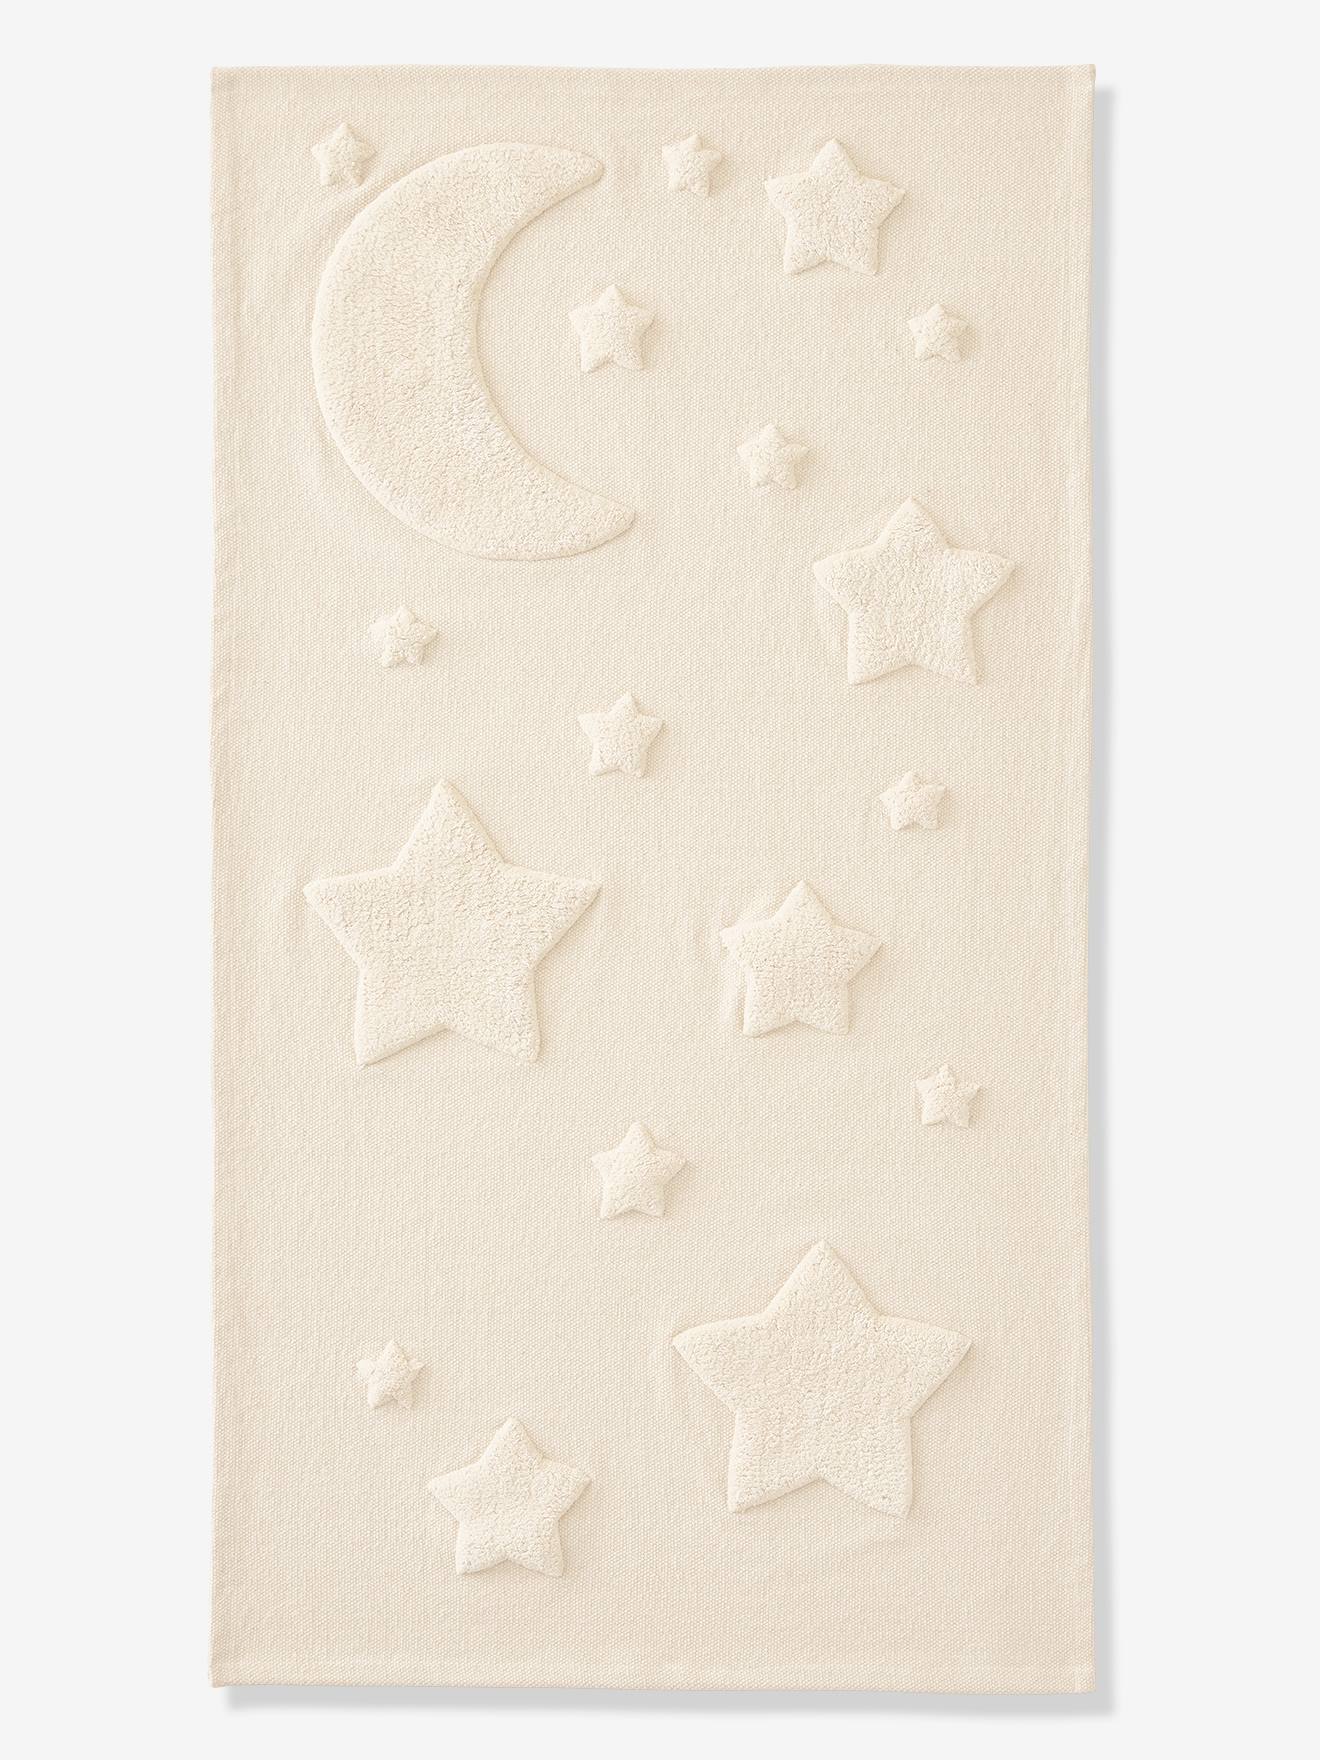 Rectangular Rug with Moon & Stars in Relief, Luna beige light solid with design